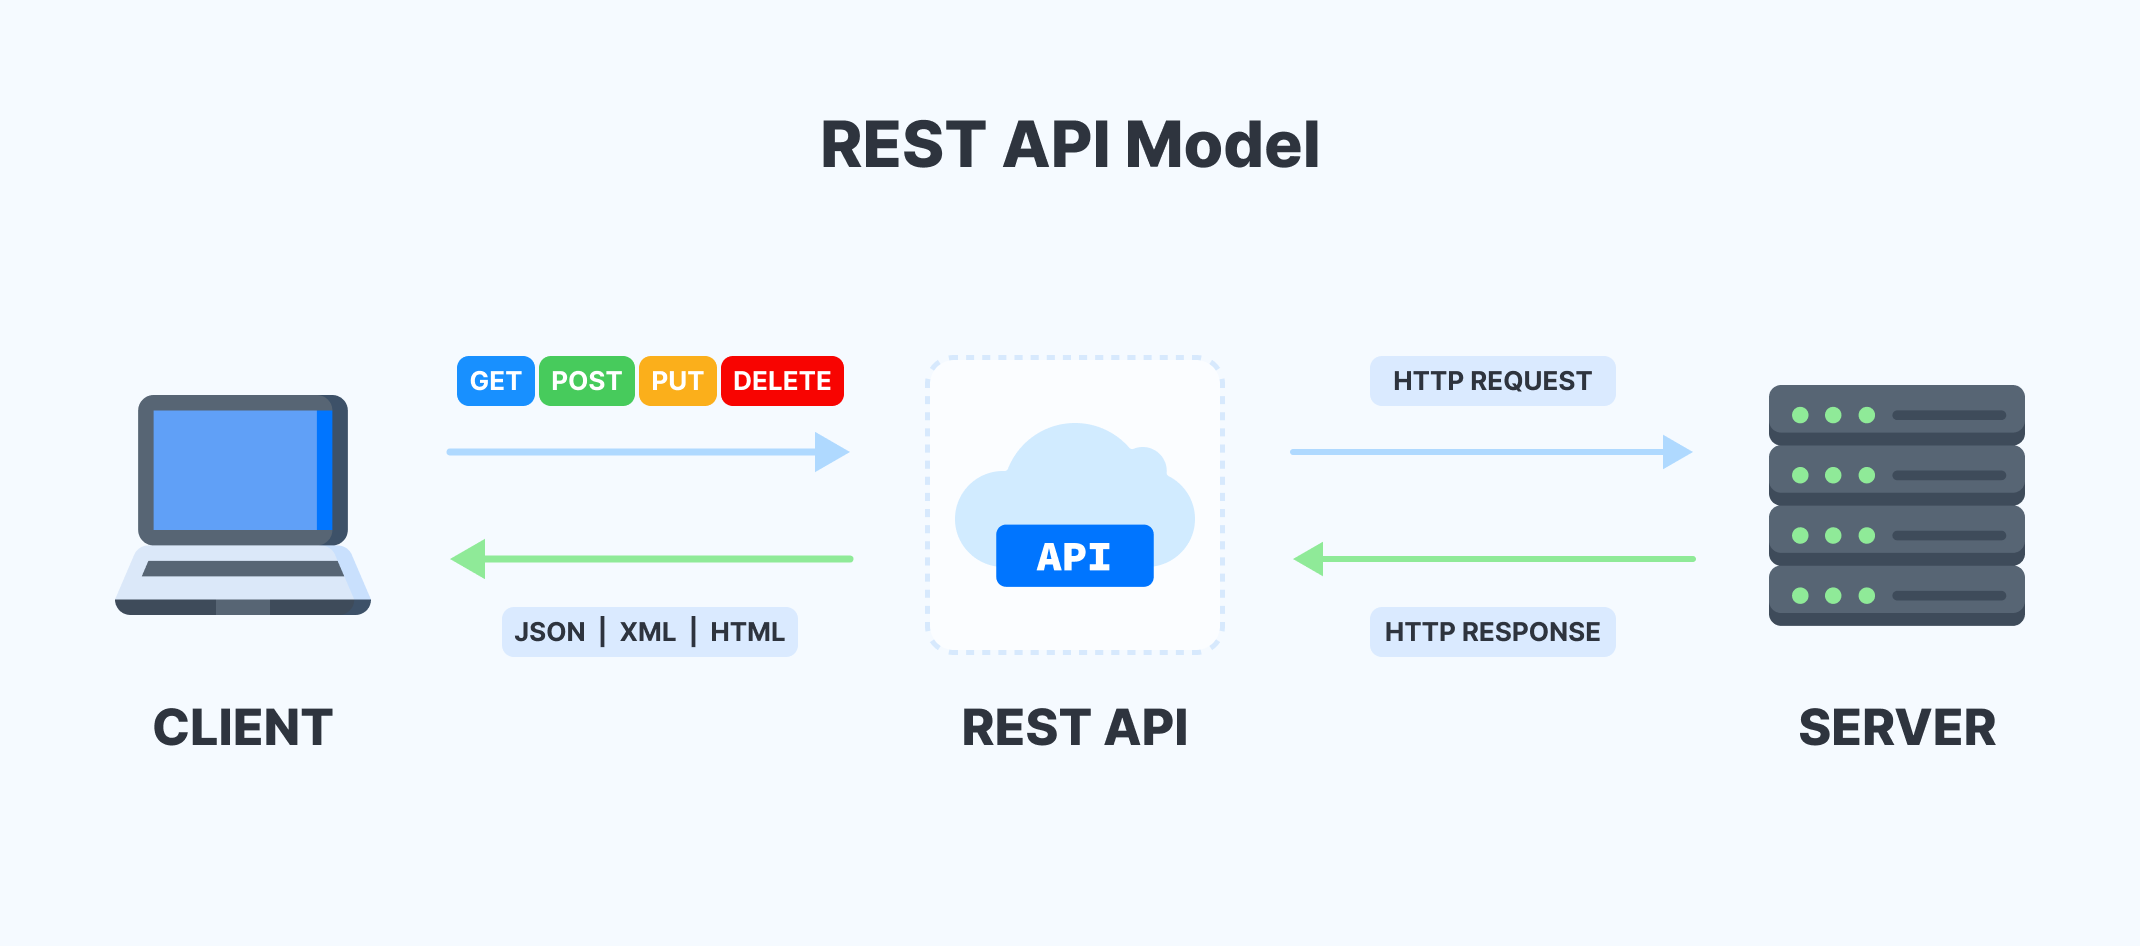 The model of REST API